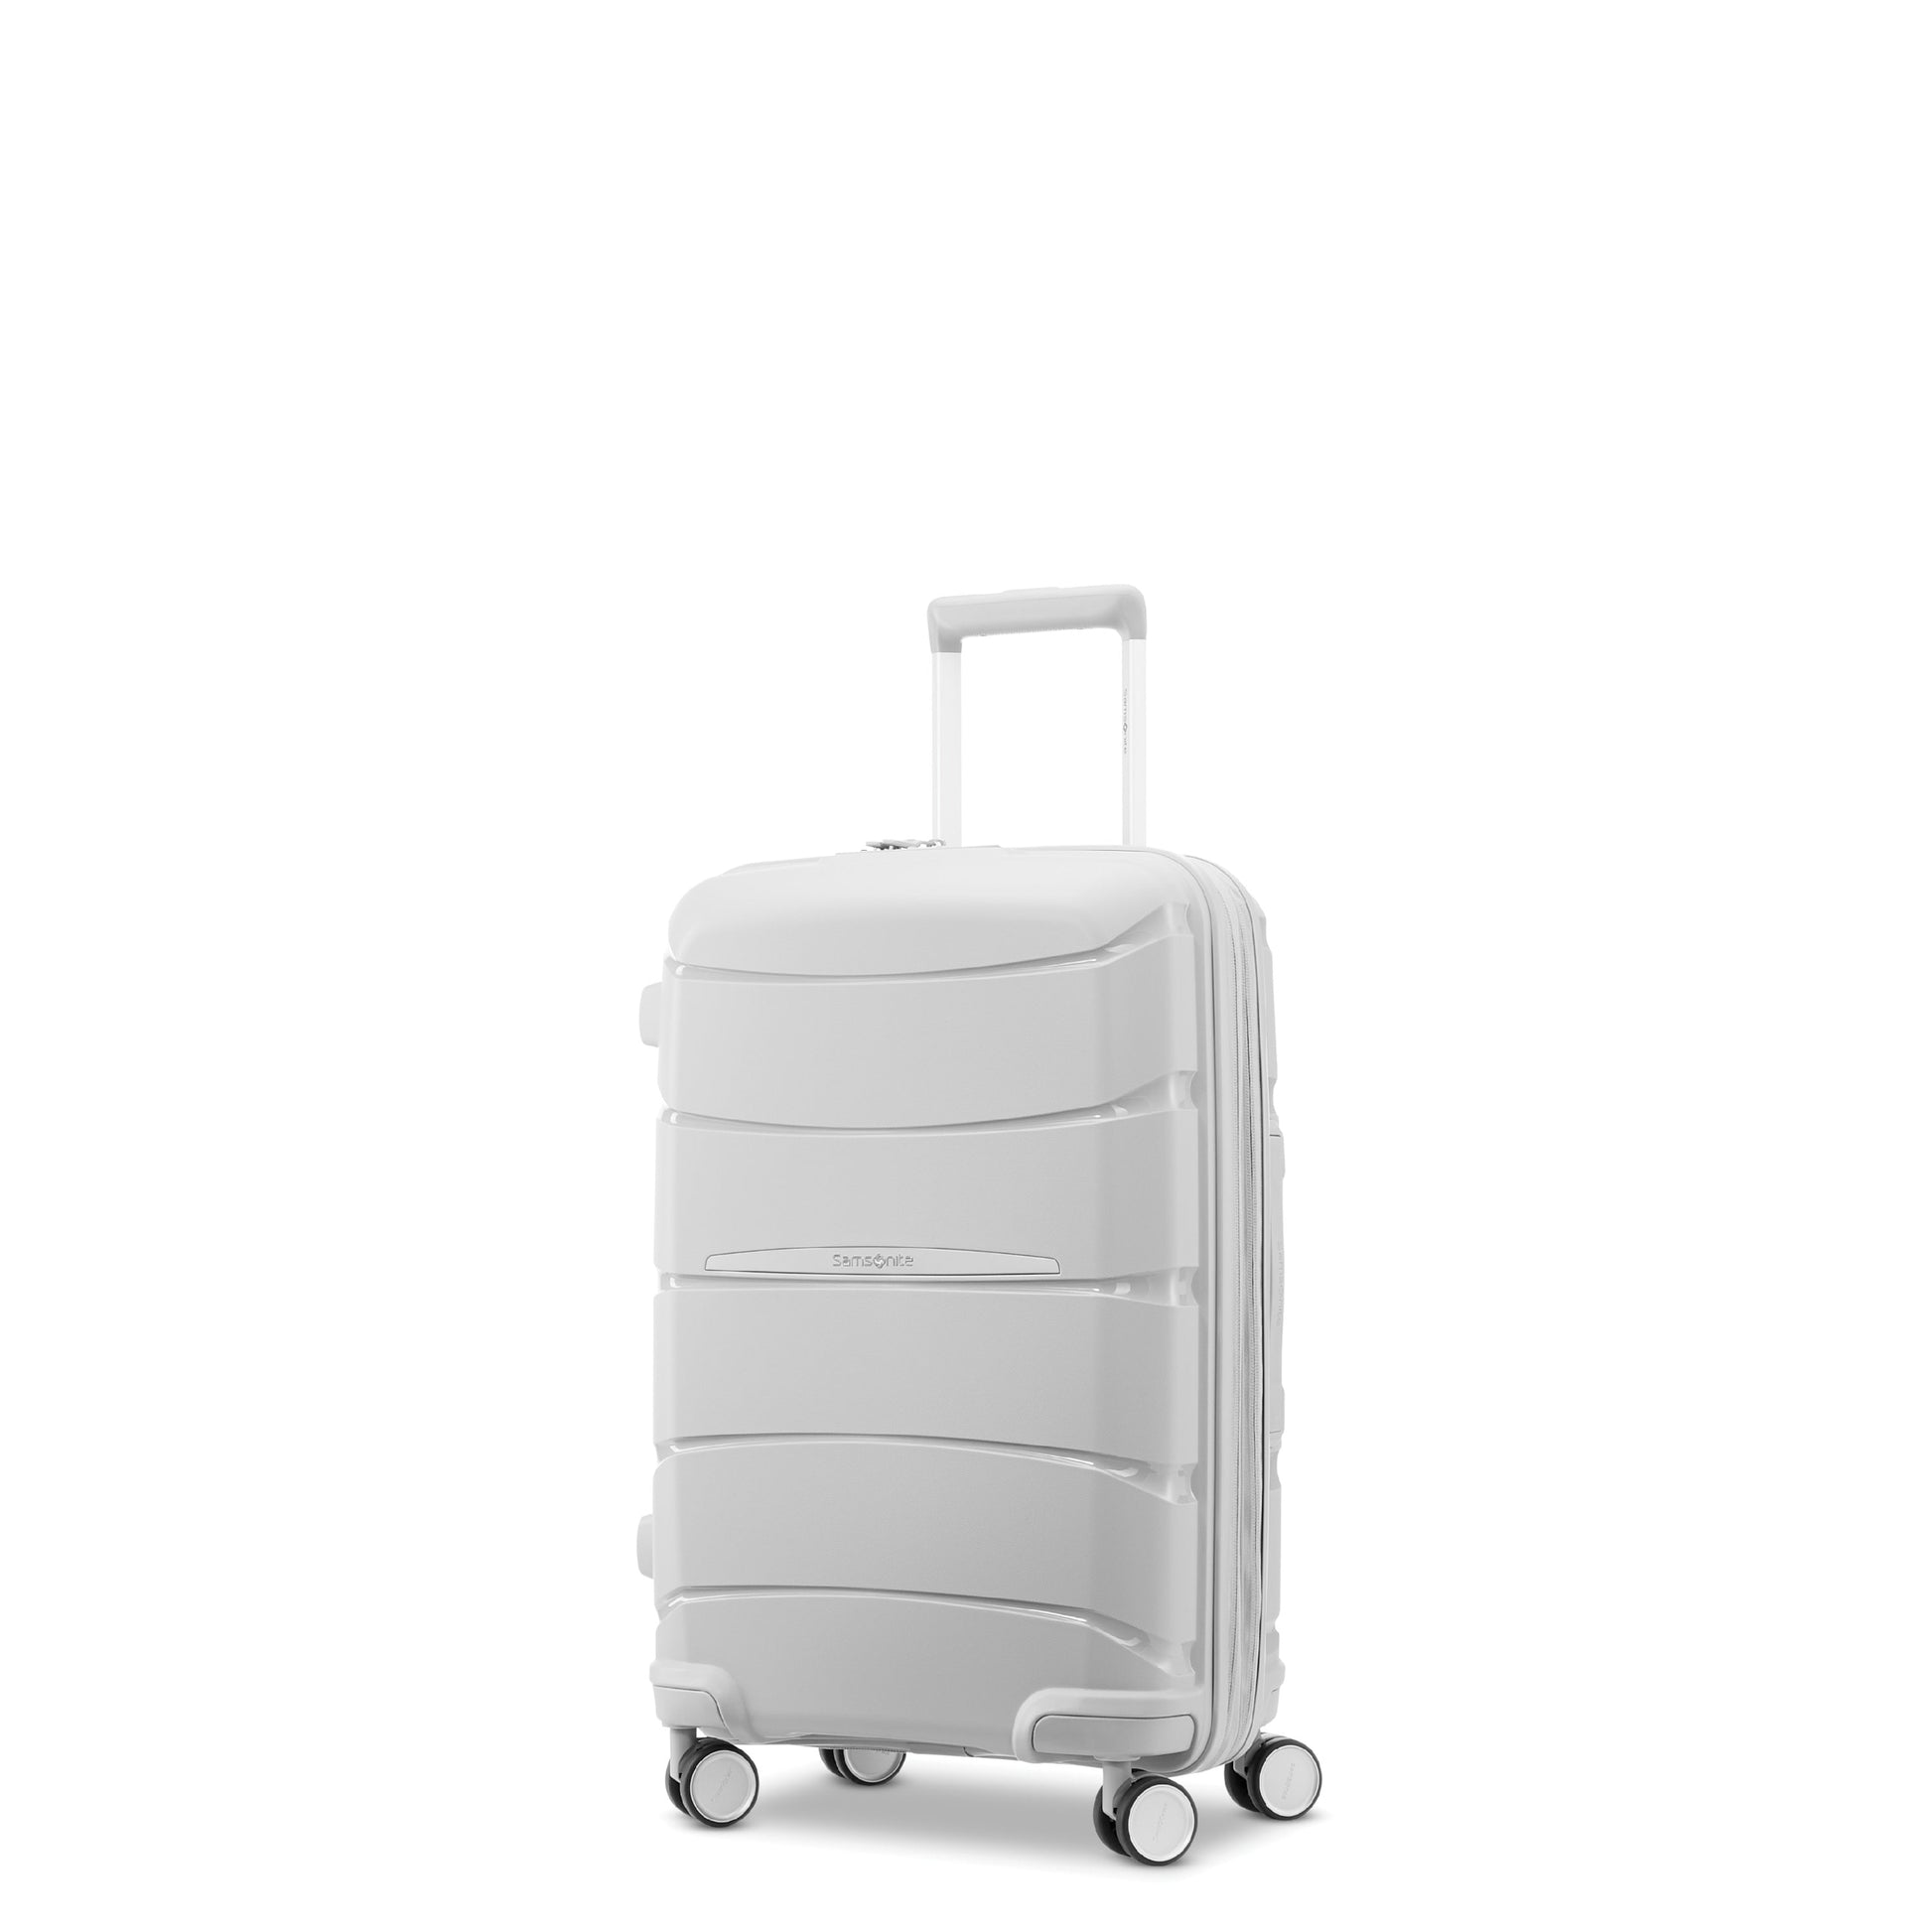 Samsonite Outline Pro Carry-On Spinner Luggage - Misty Grey